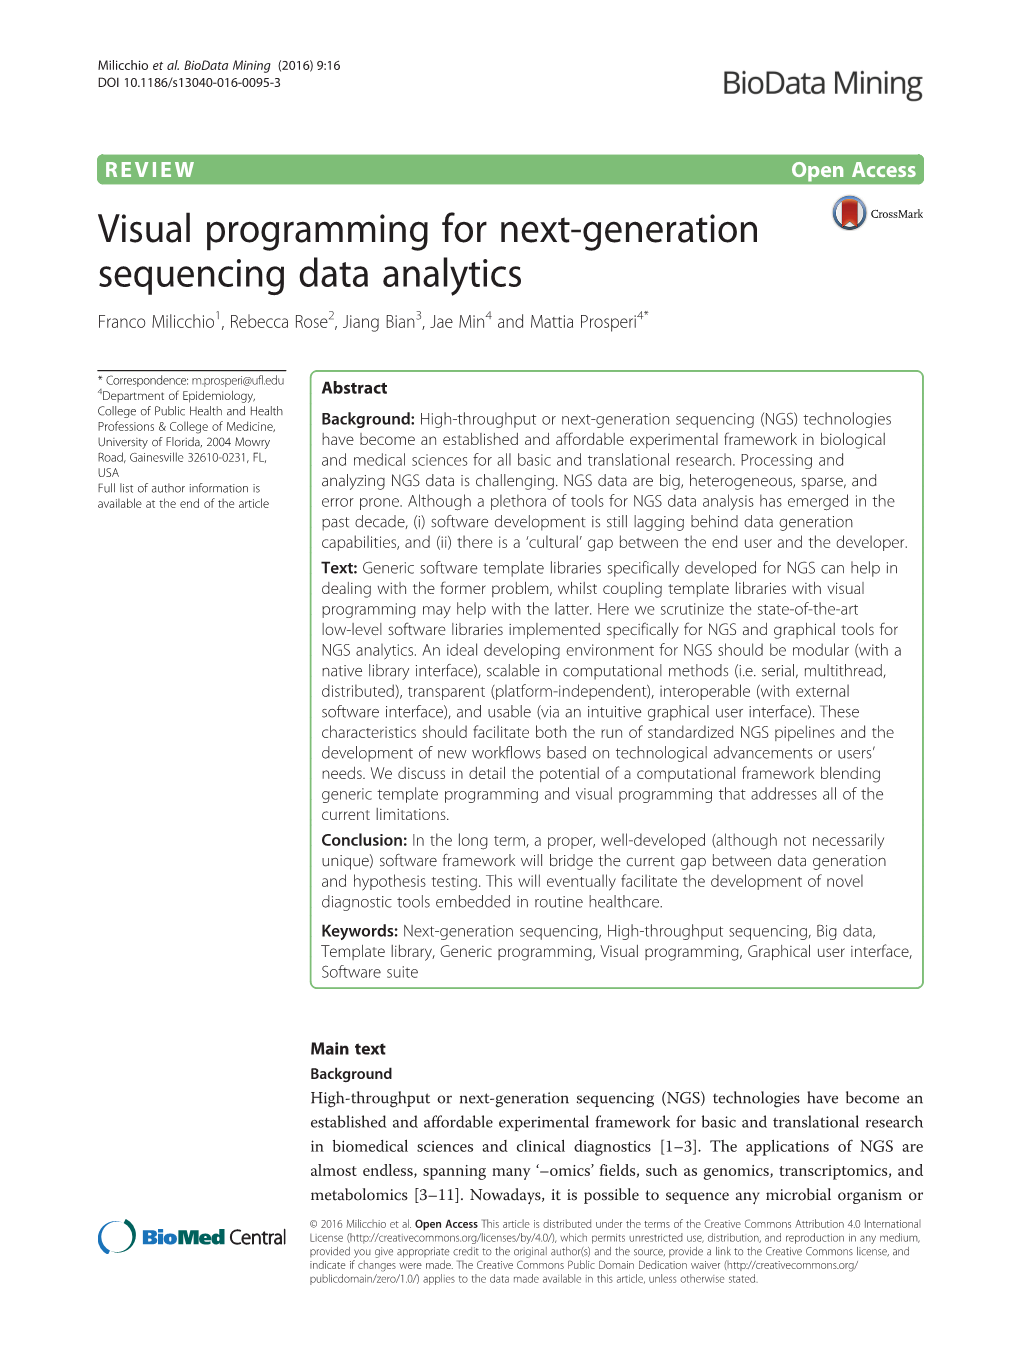 Visual Programming for Next-Generation Sequencing Data Analytics Franco Milicchio1, Rebecca Rose2, Jiang Bian3, Jae Min4 and Mattia Prosperi4*